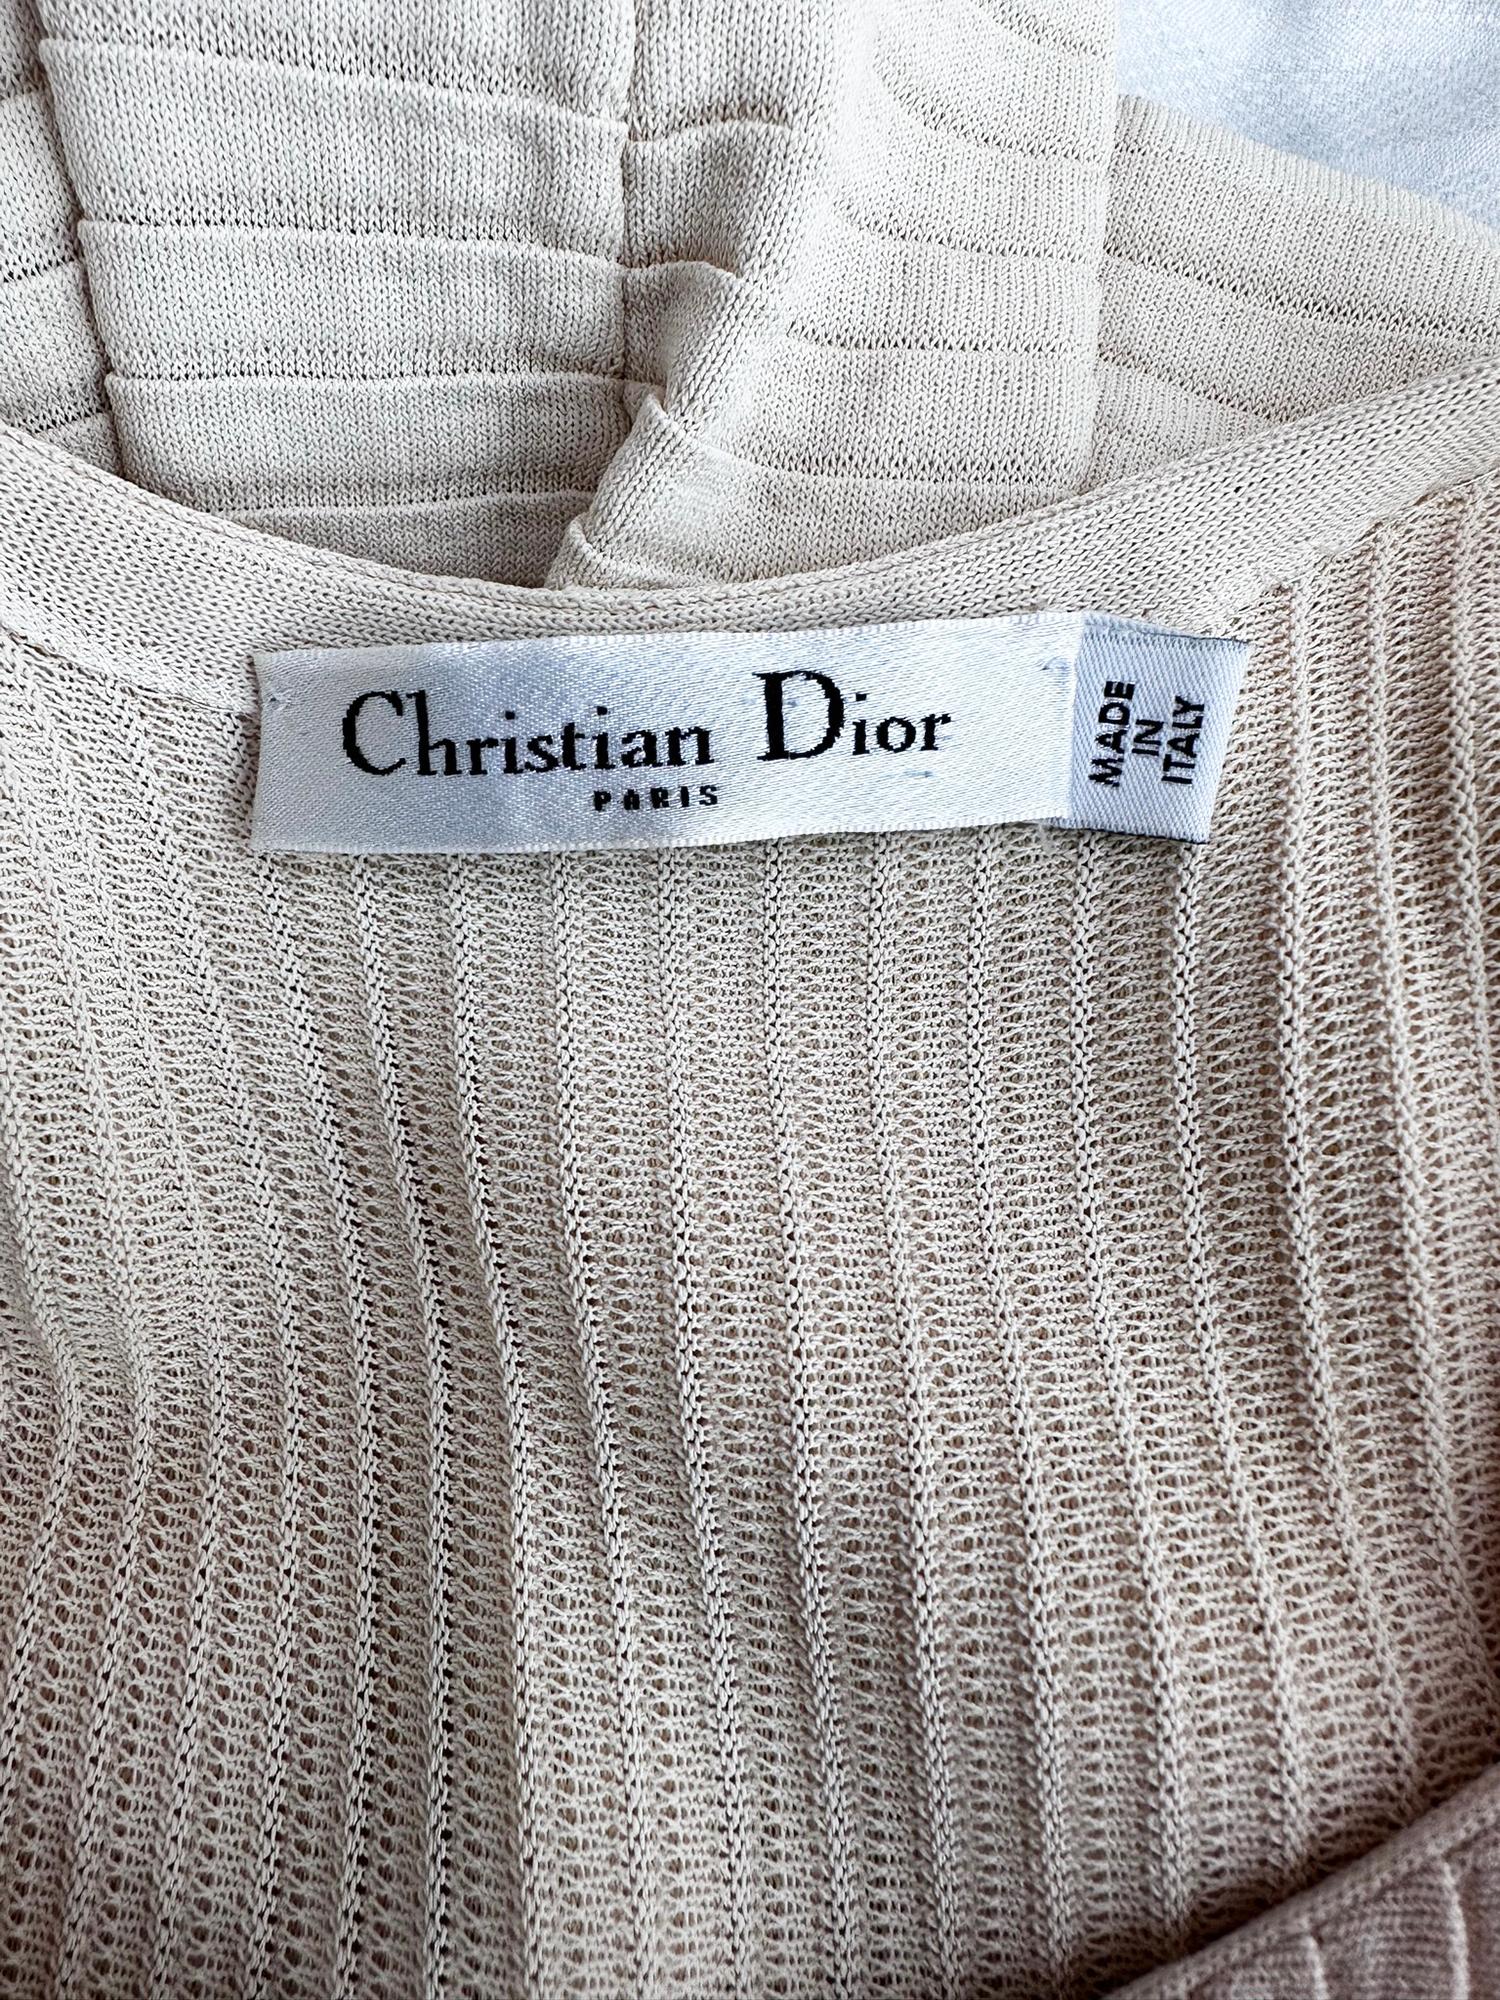 Christian Dior Paris Ribbed Knit Beige Tank Dress 2010 For Sale 12